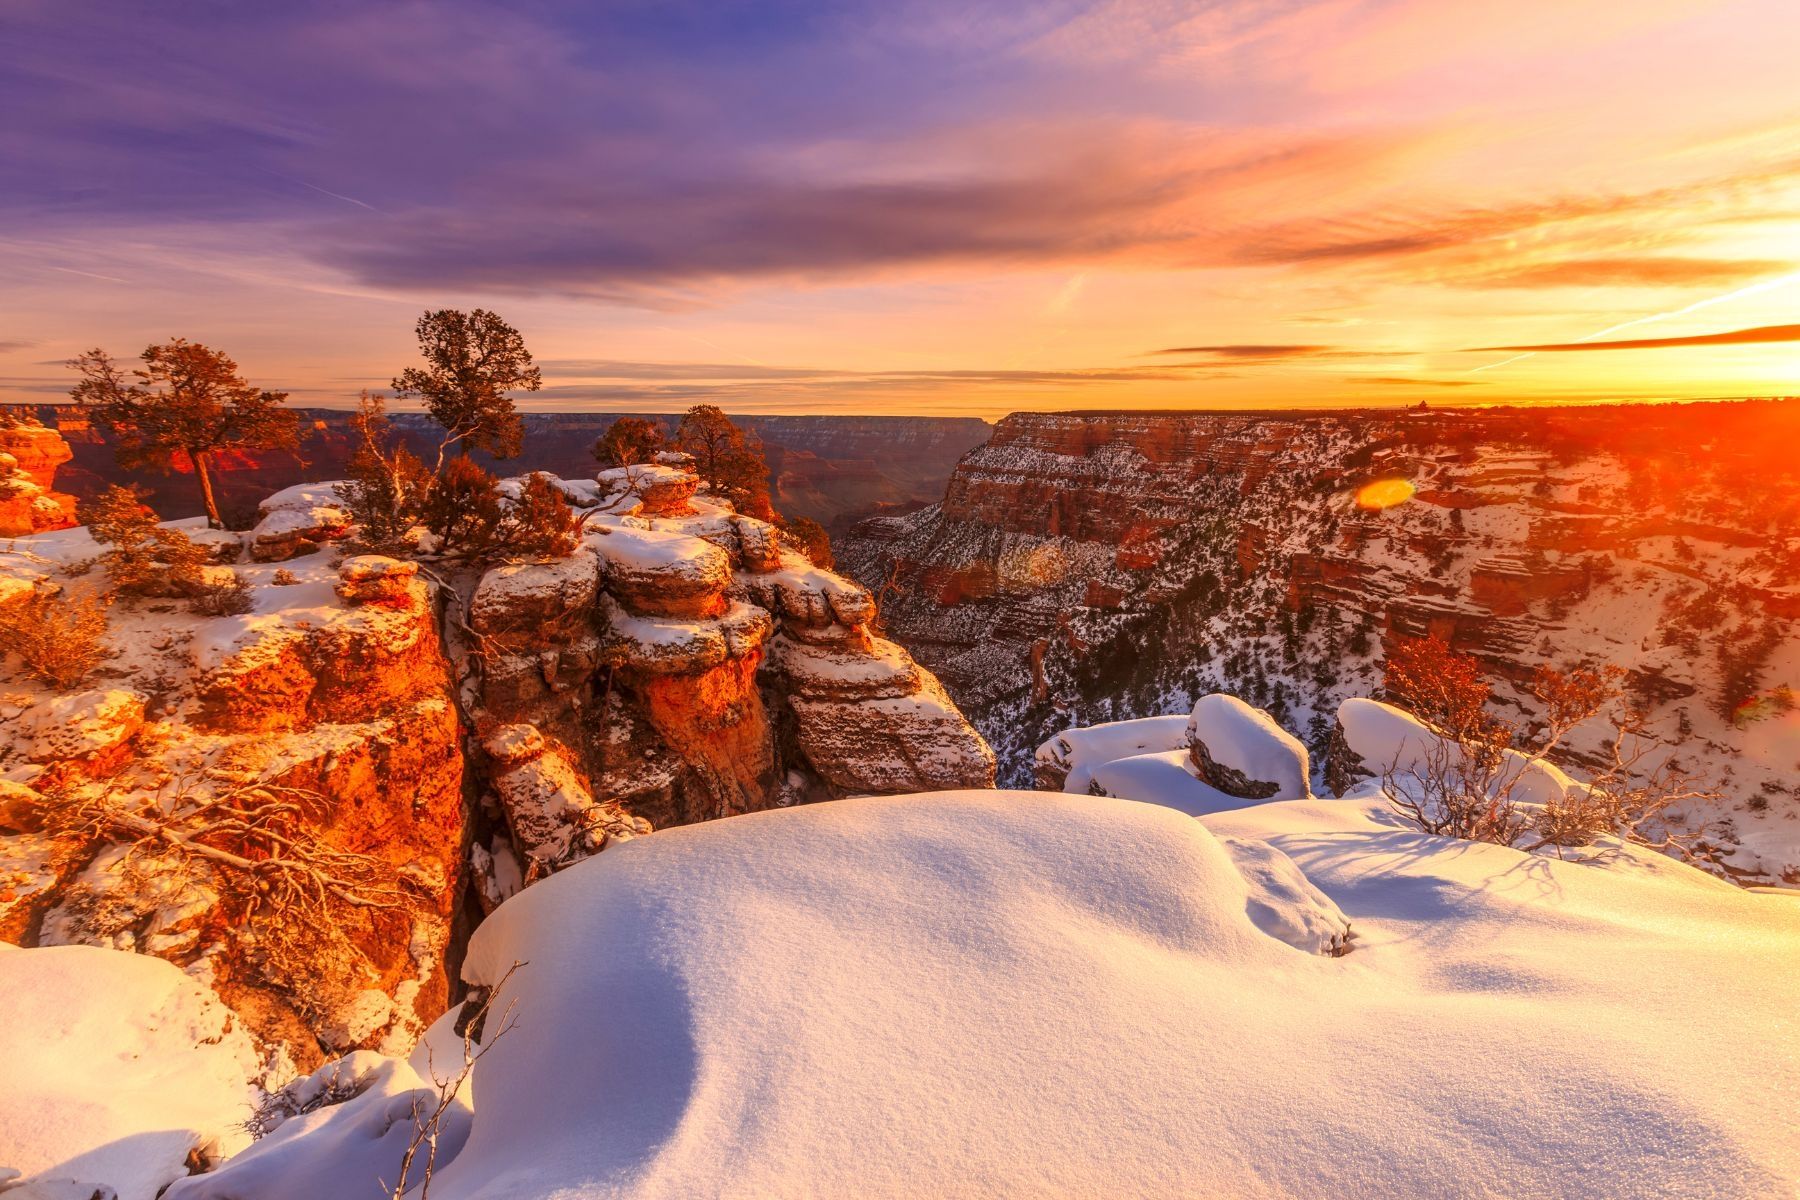 Winter Wonders of the Southwest Photo Workshop